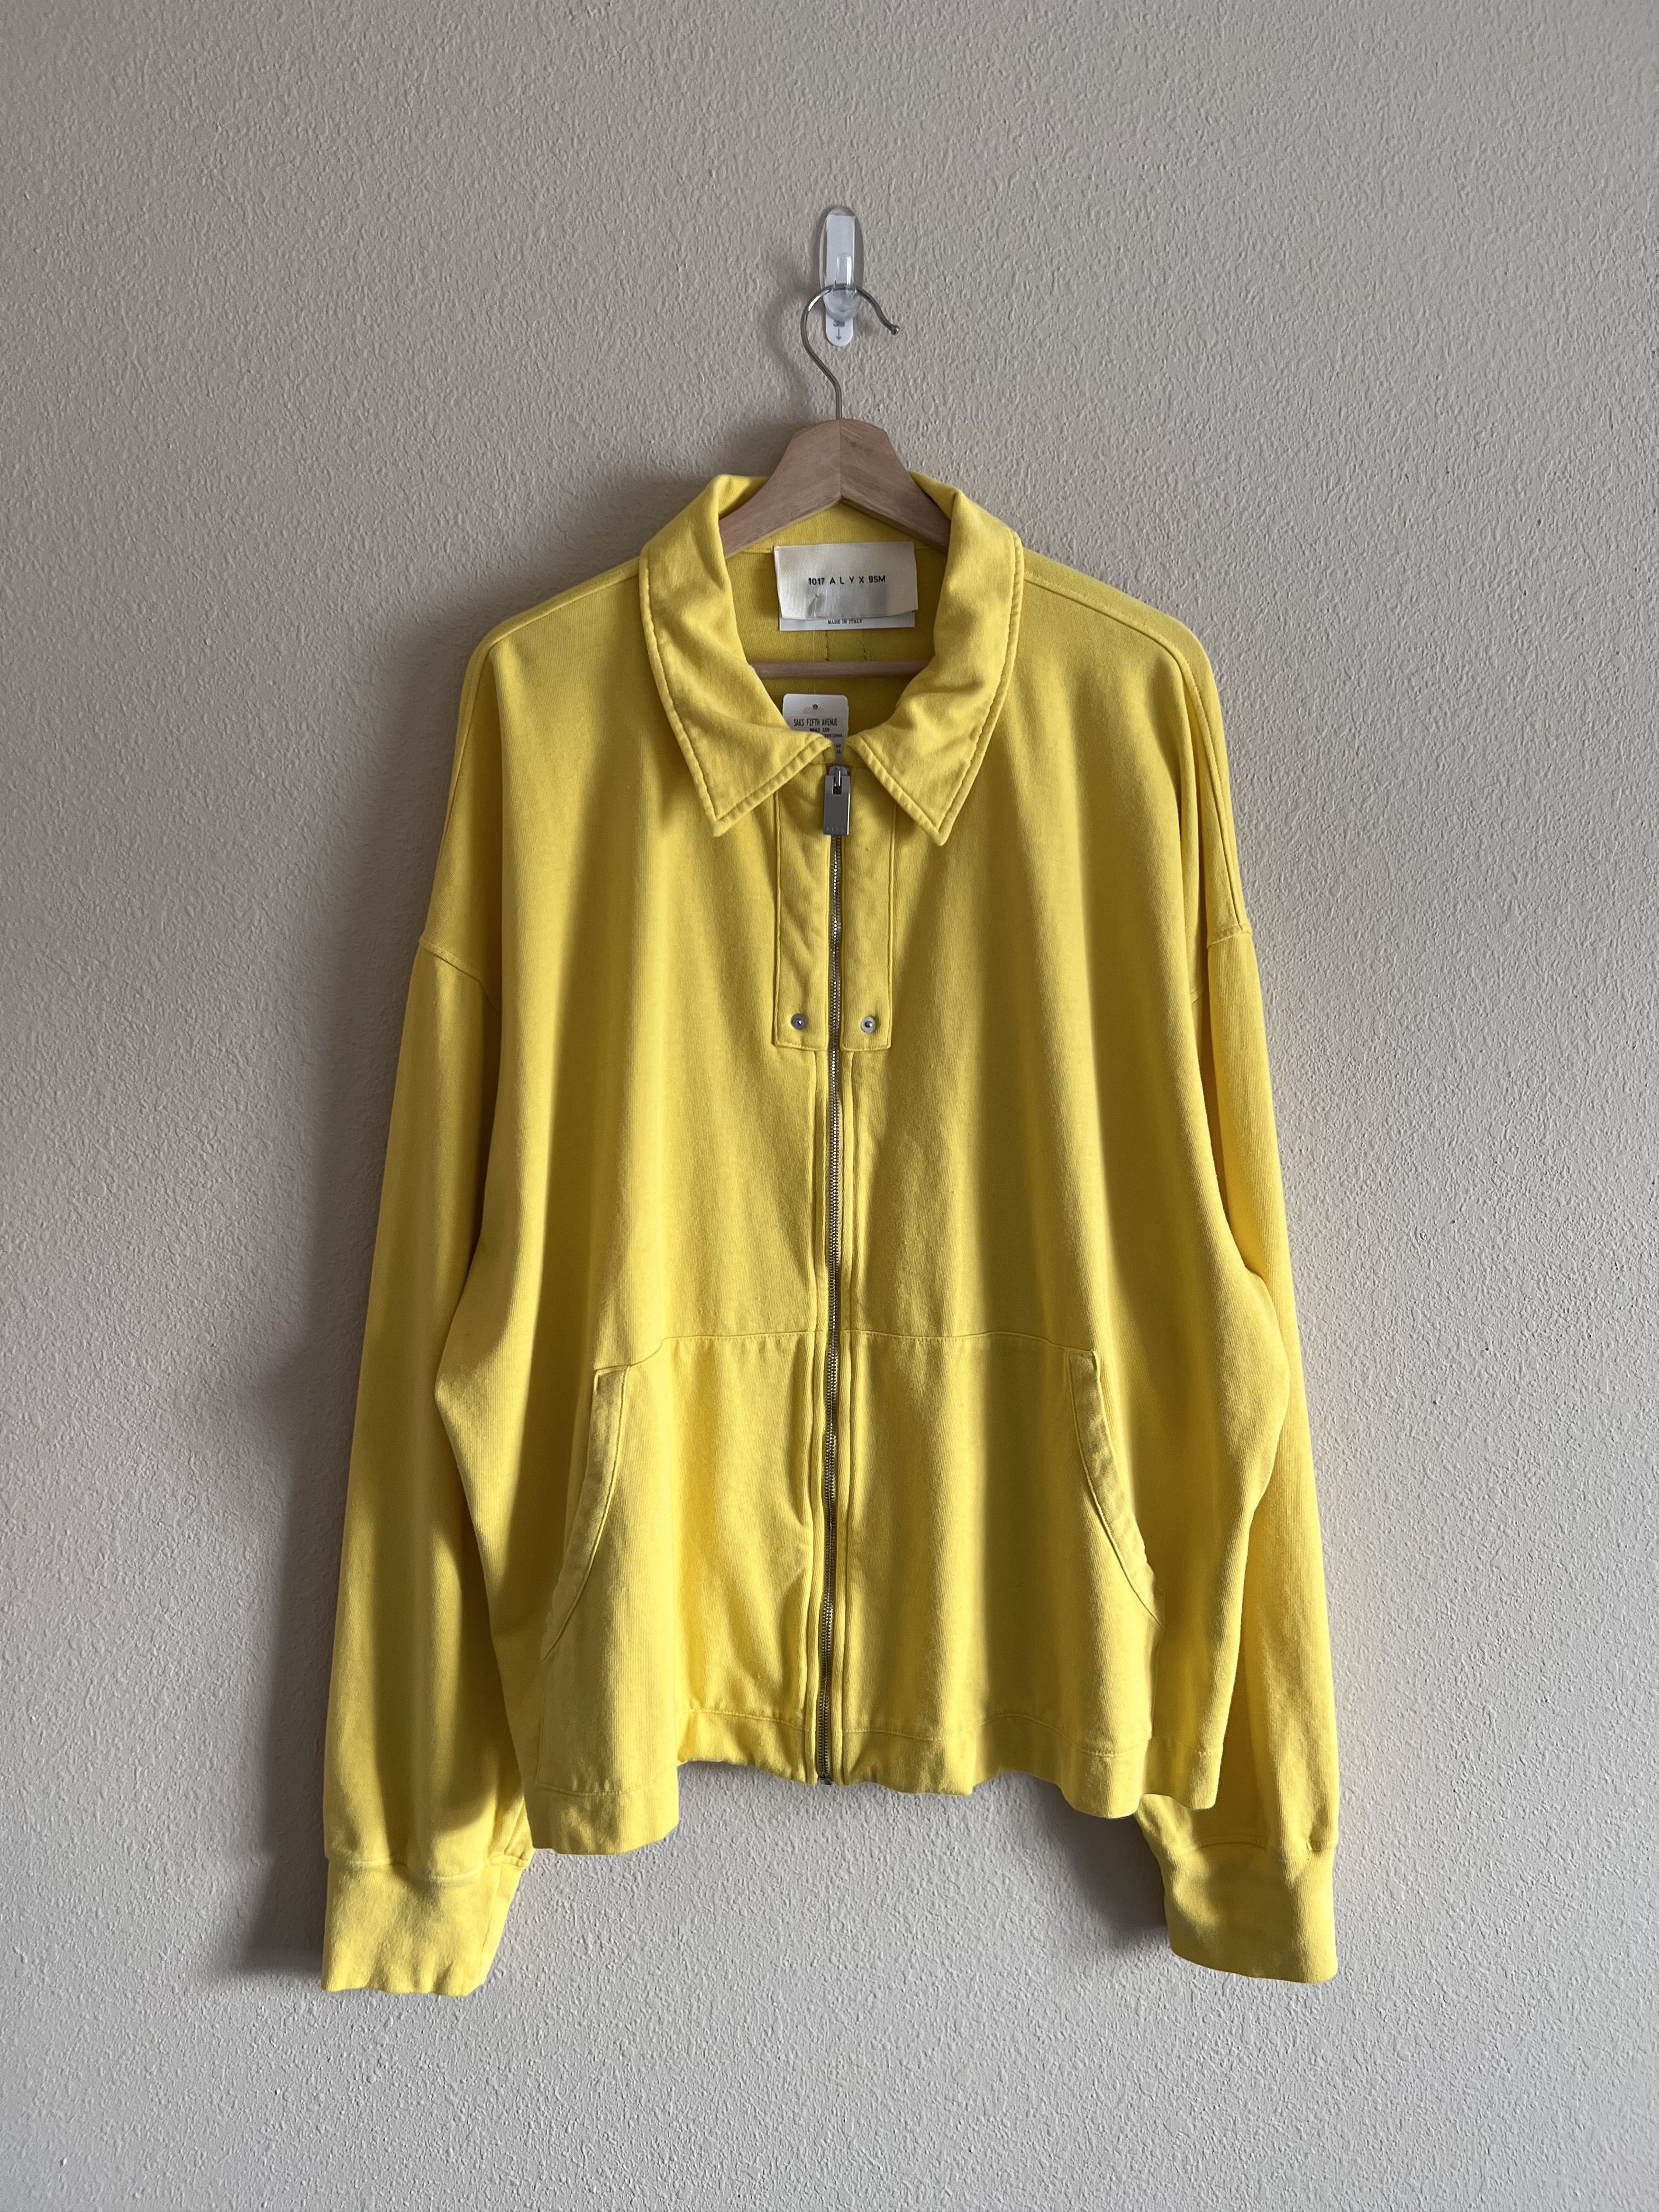 1017 ALYX 9SM 1017 Alyx 9SM Jersey Zip Jacket in Yellow | Grailed